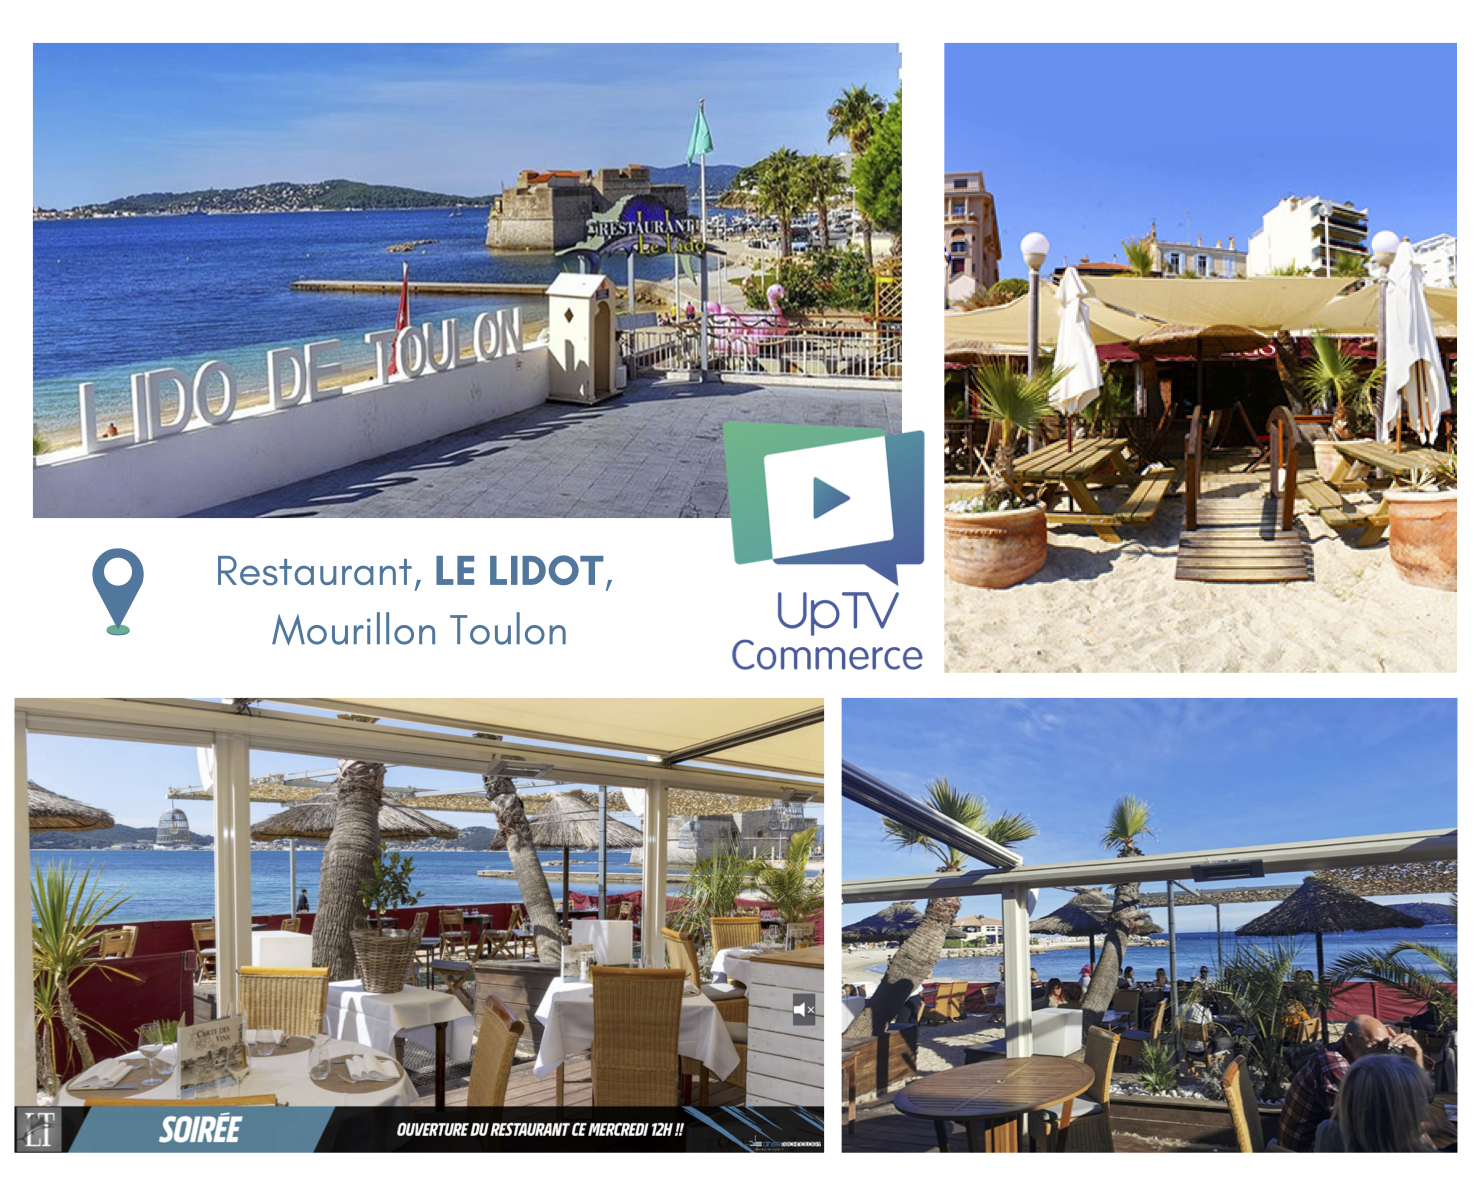 UpTV Commerce Le LIDOT restaurant, TLN Anse Technology